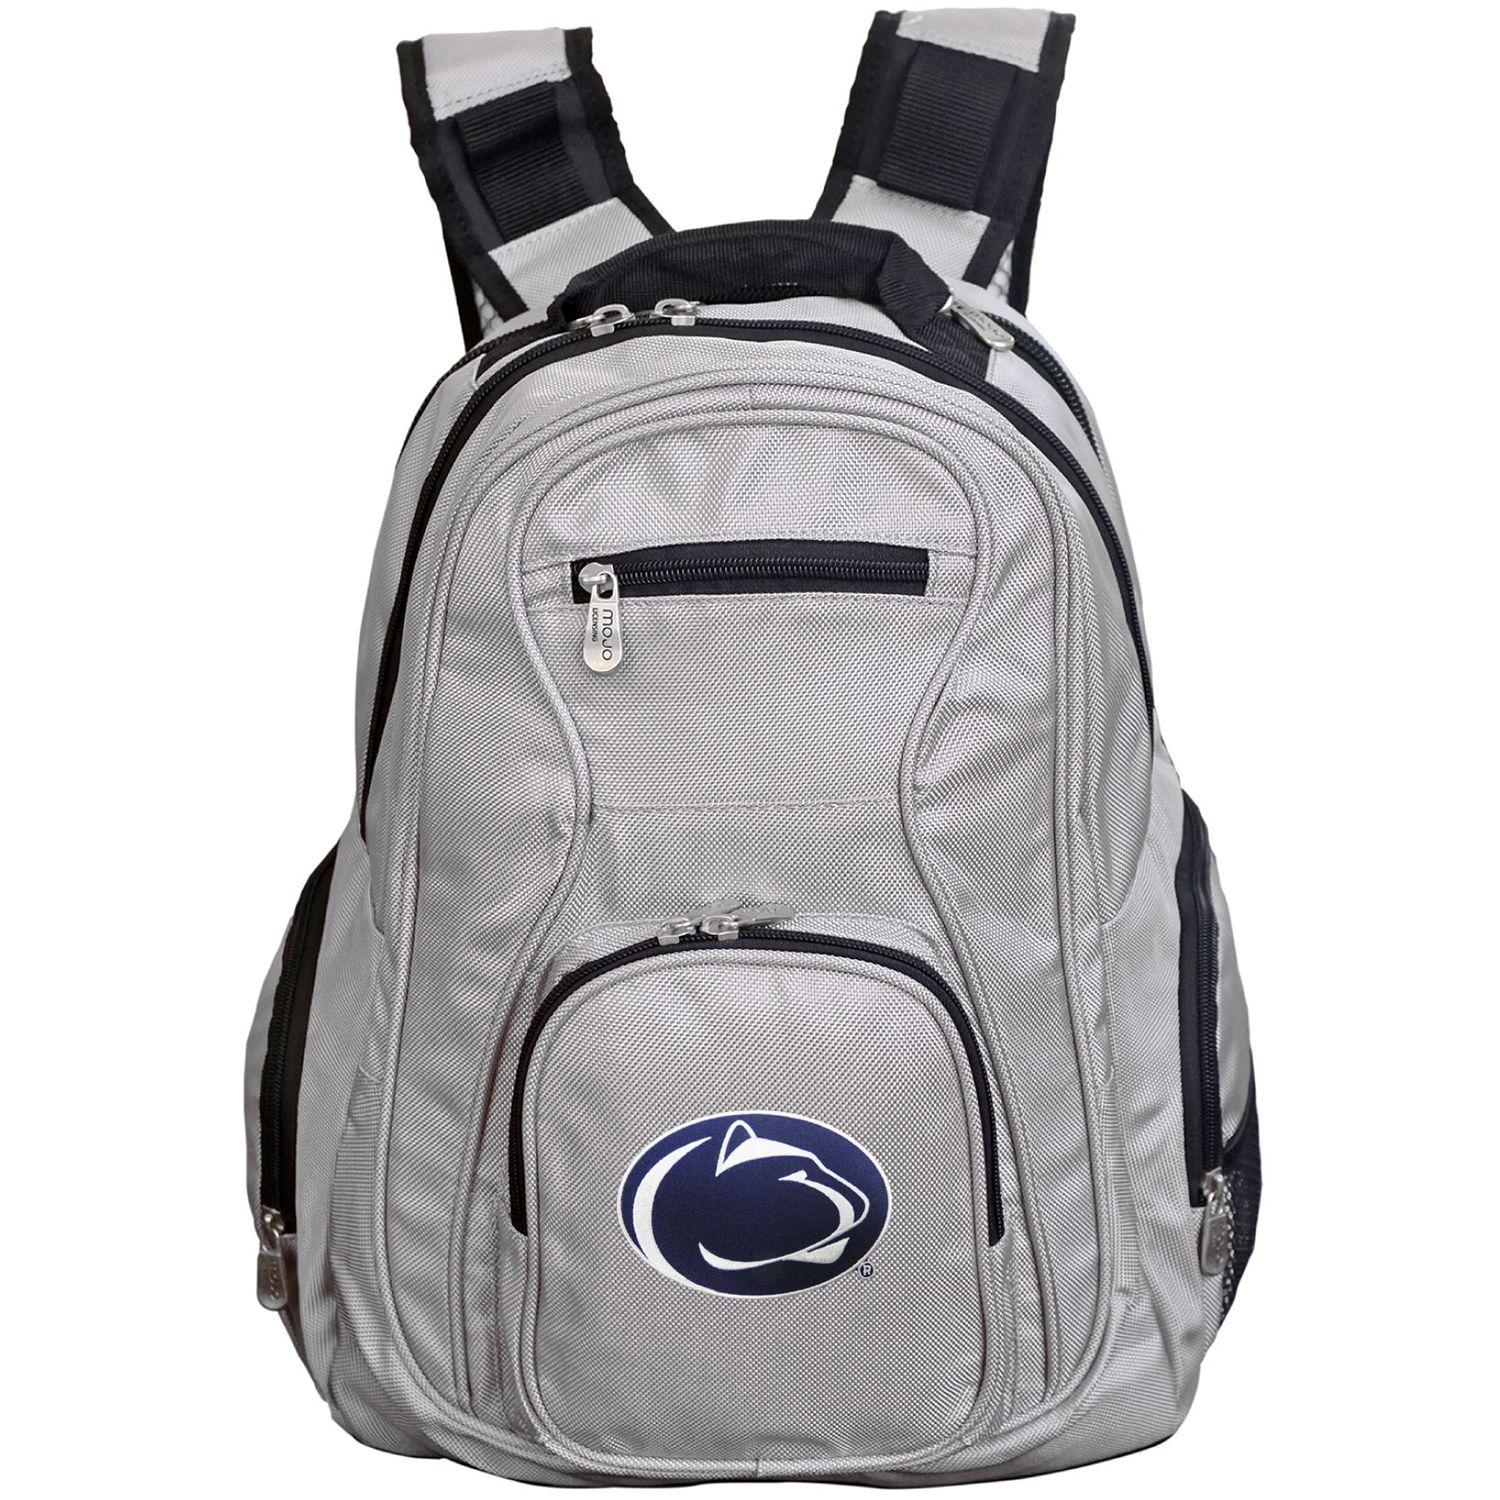 Рюкзак для ноутбука Penn State Nittany Lions премиум-класса